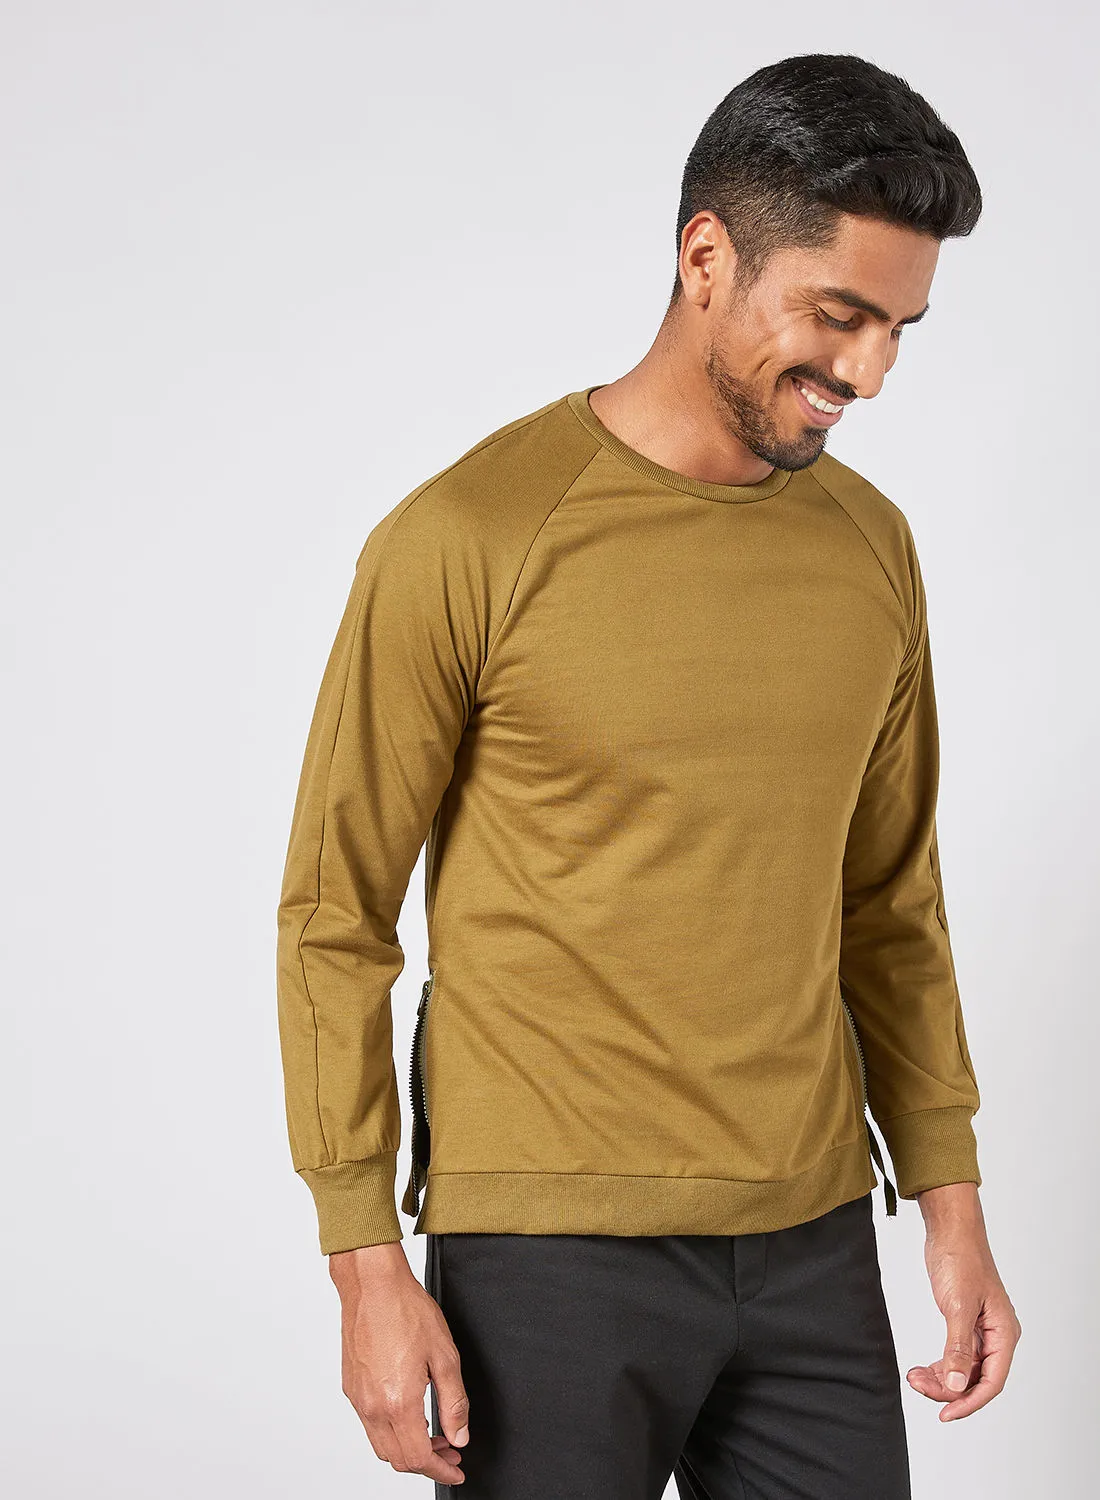 QUWA Men Casual Trendy Side Zip Strap Long Sleeves Crew Neck Pullover Sweatshirt Olive